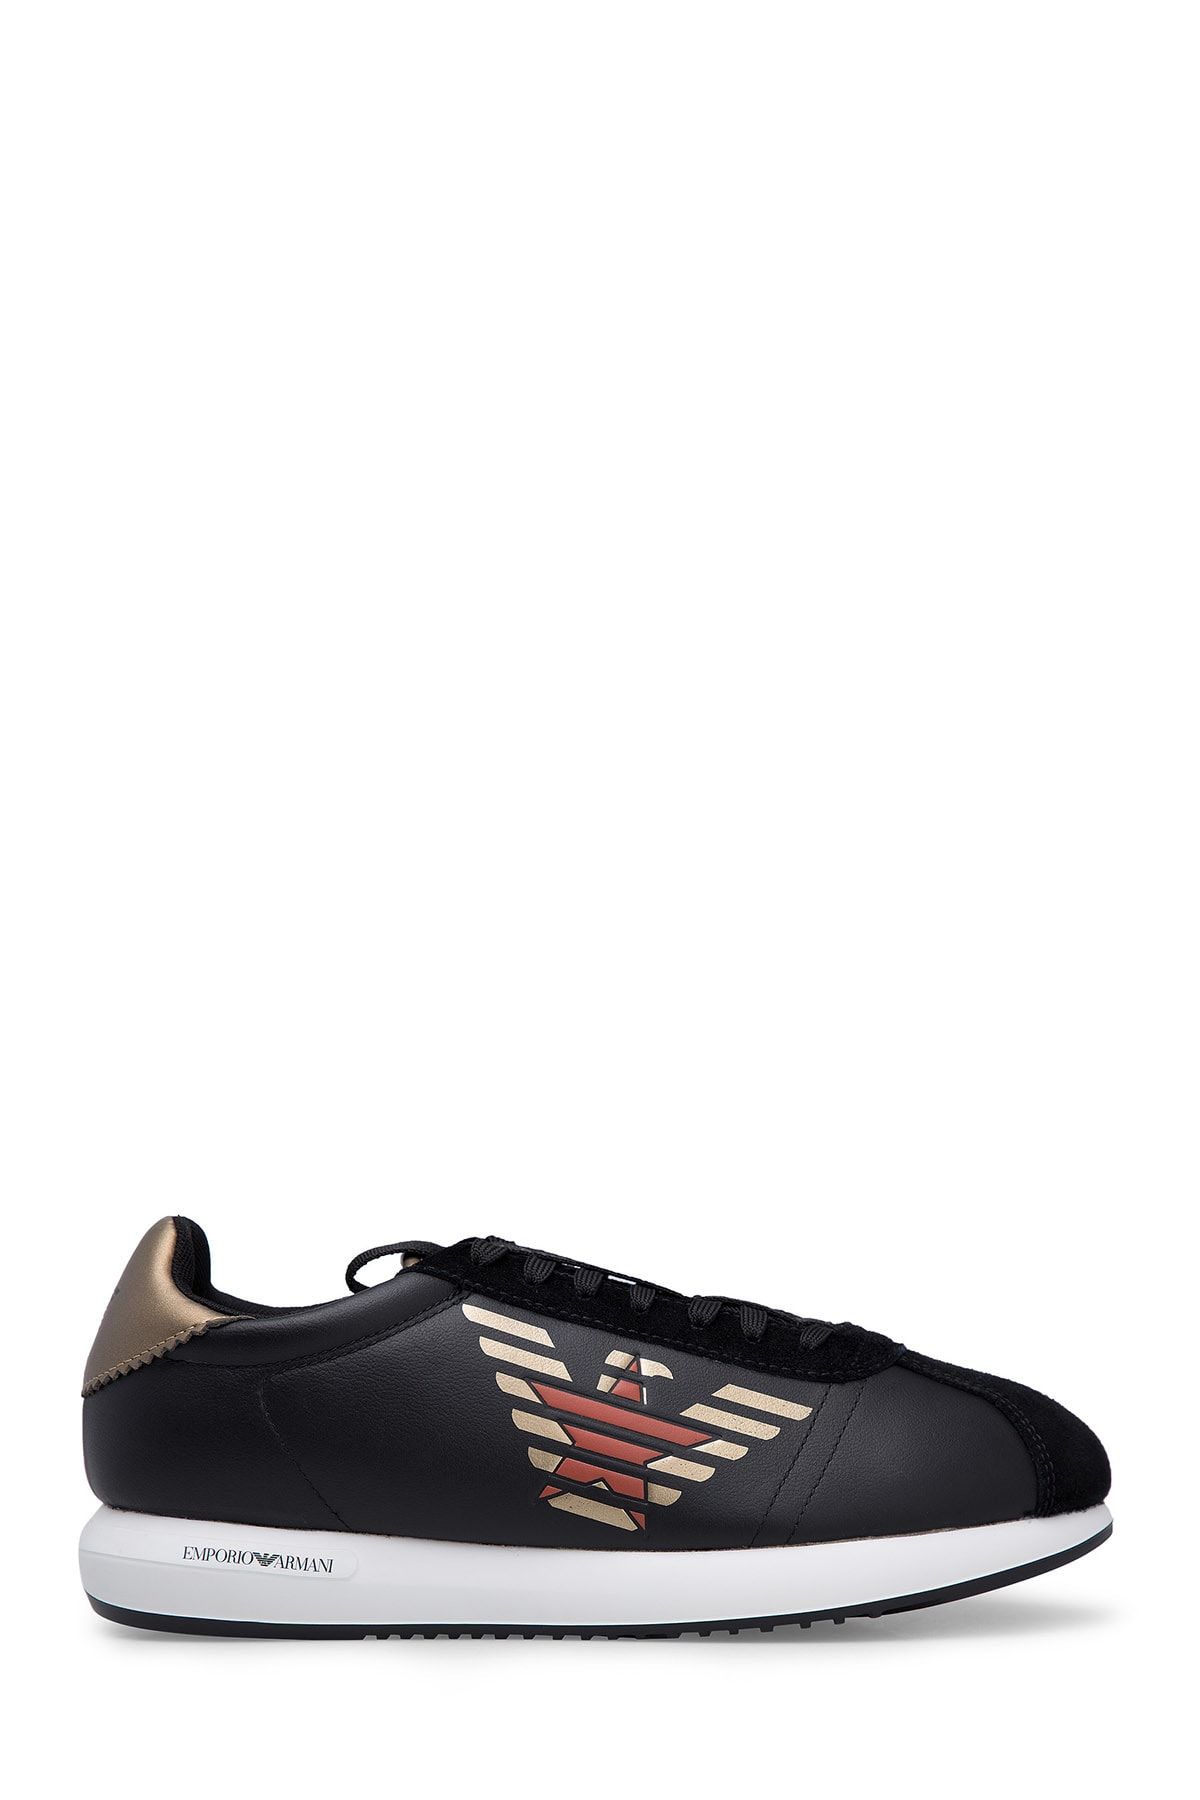 Emporio Armani Erkek Siyah Sneaker X4X260 XM050 R332